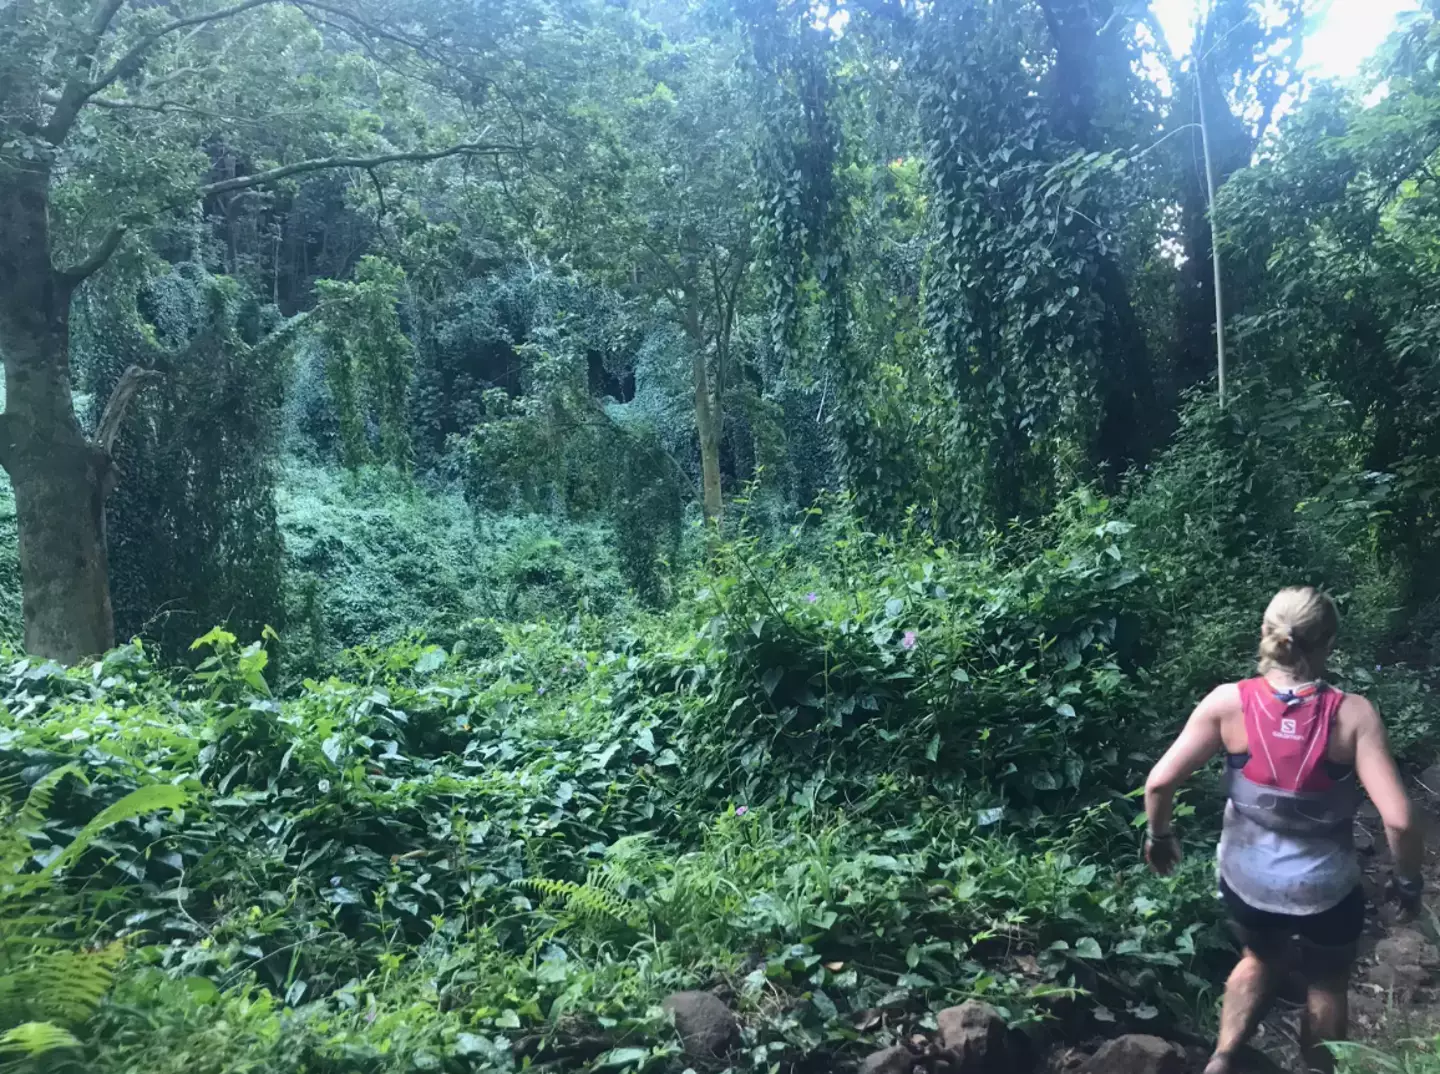 Kay Borleis had been taking part in the Hawaiian Ultra Running Team’s Trail 100-Mile Endurance Run.